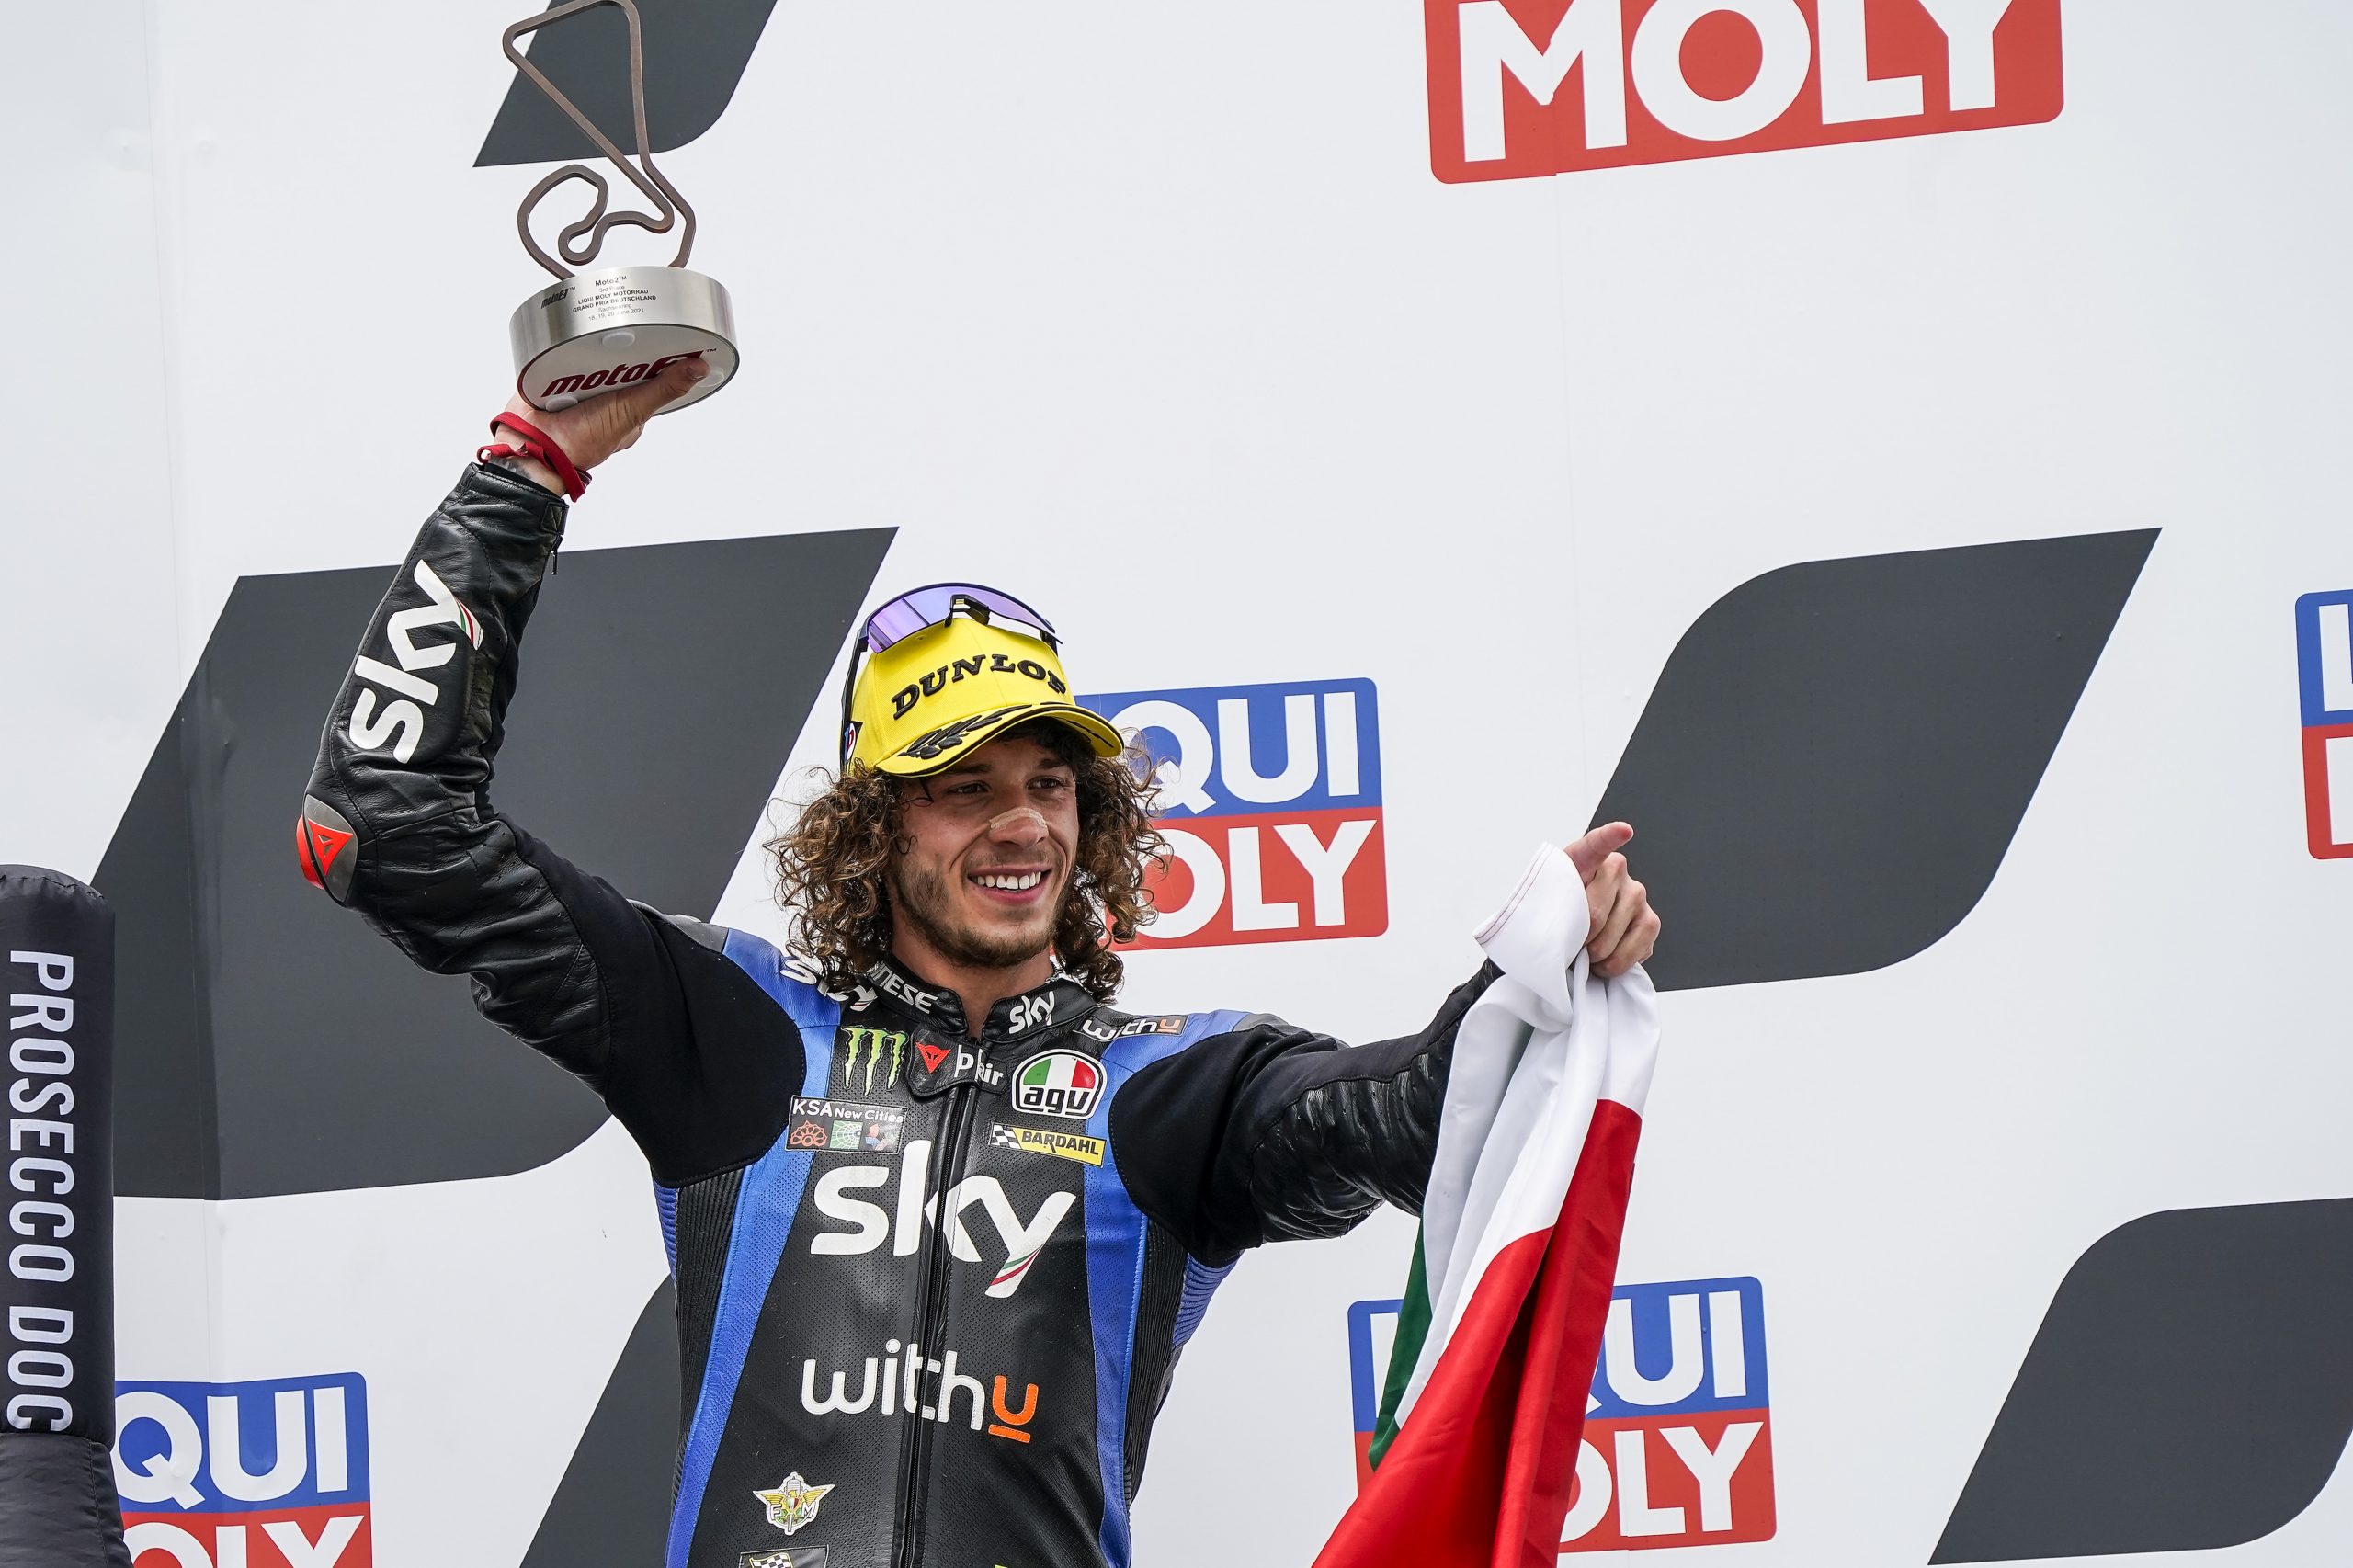 Marco Bezzecchi na podium GP Niemiec 2021 klasy Moto2